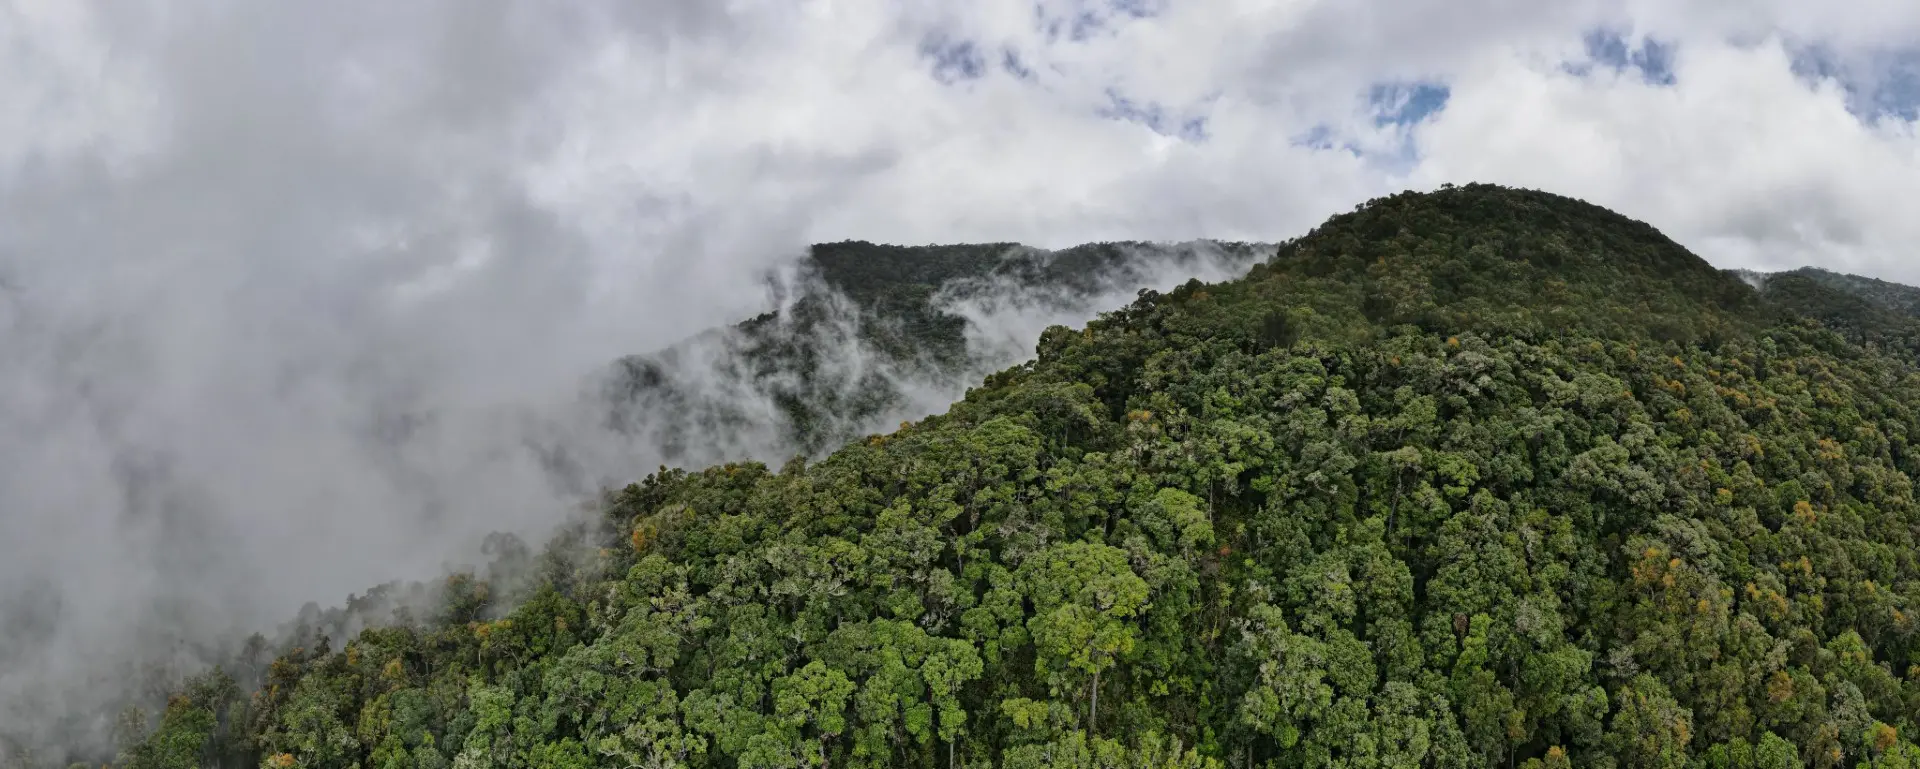 los-quetzales-national-park-costa-rica-c-kyle-pearce-on-unsplash.jpg